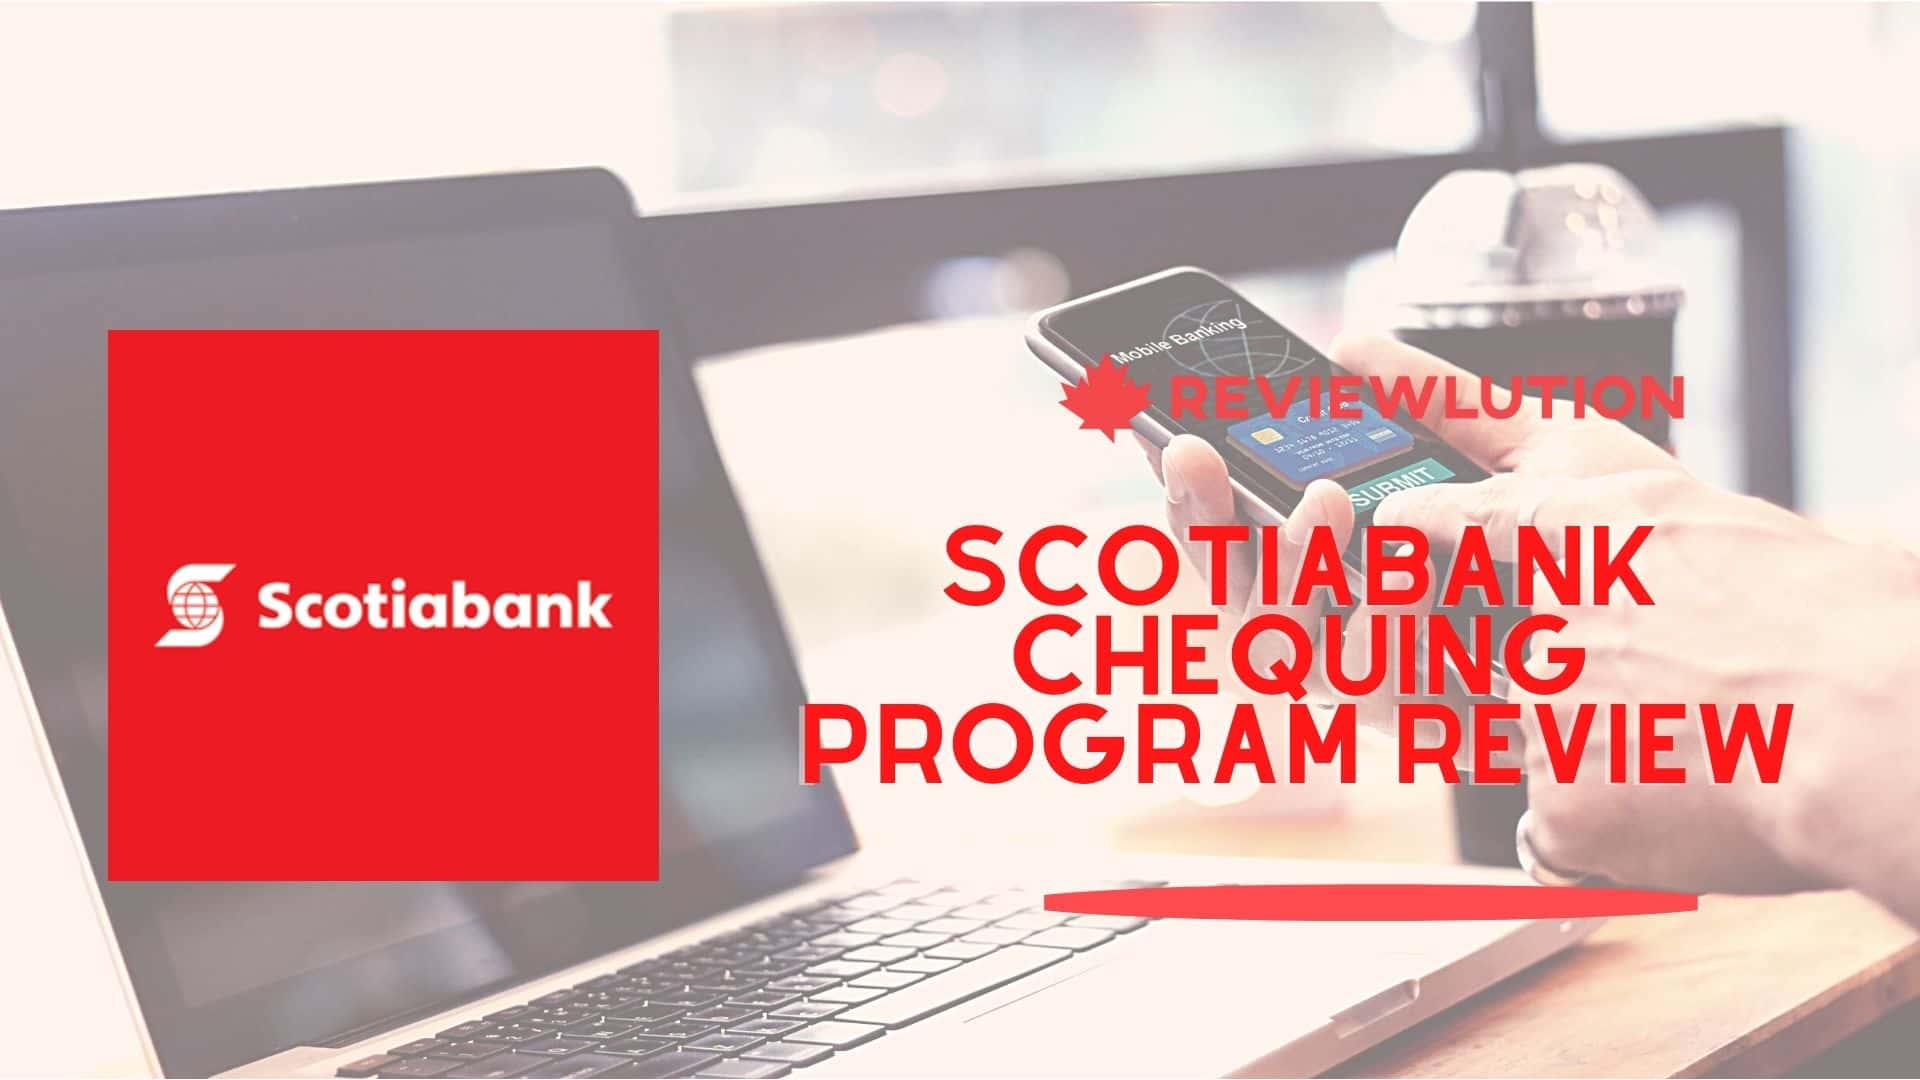 Scotiabank Chequing Program